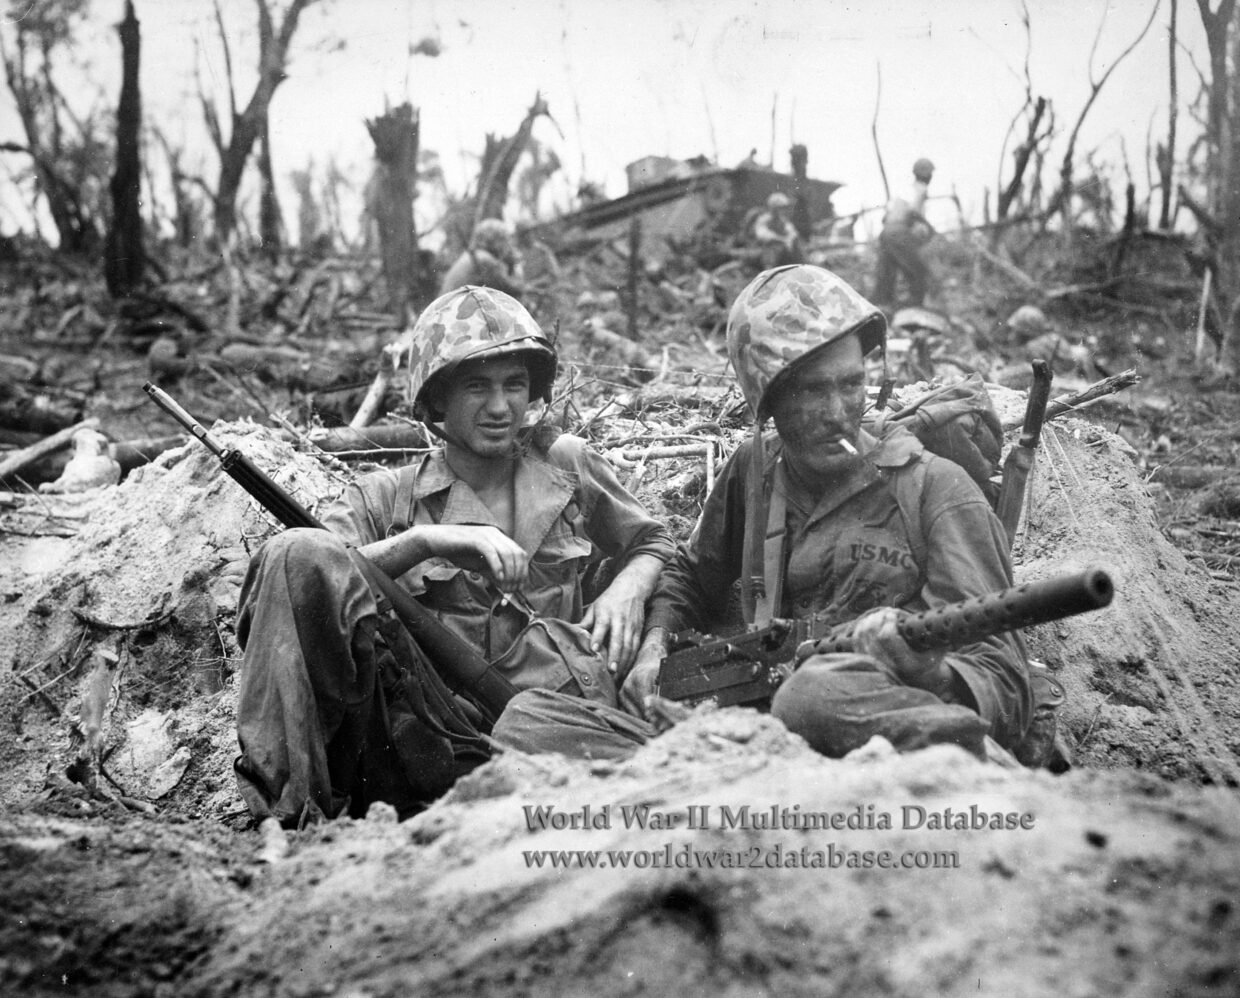 Marines Gerald P. Thursby and Douglas D. Lightheart Smoke During Battle of Peleliu